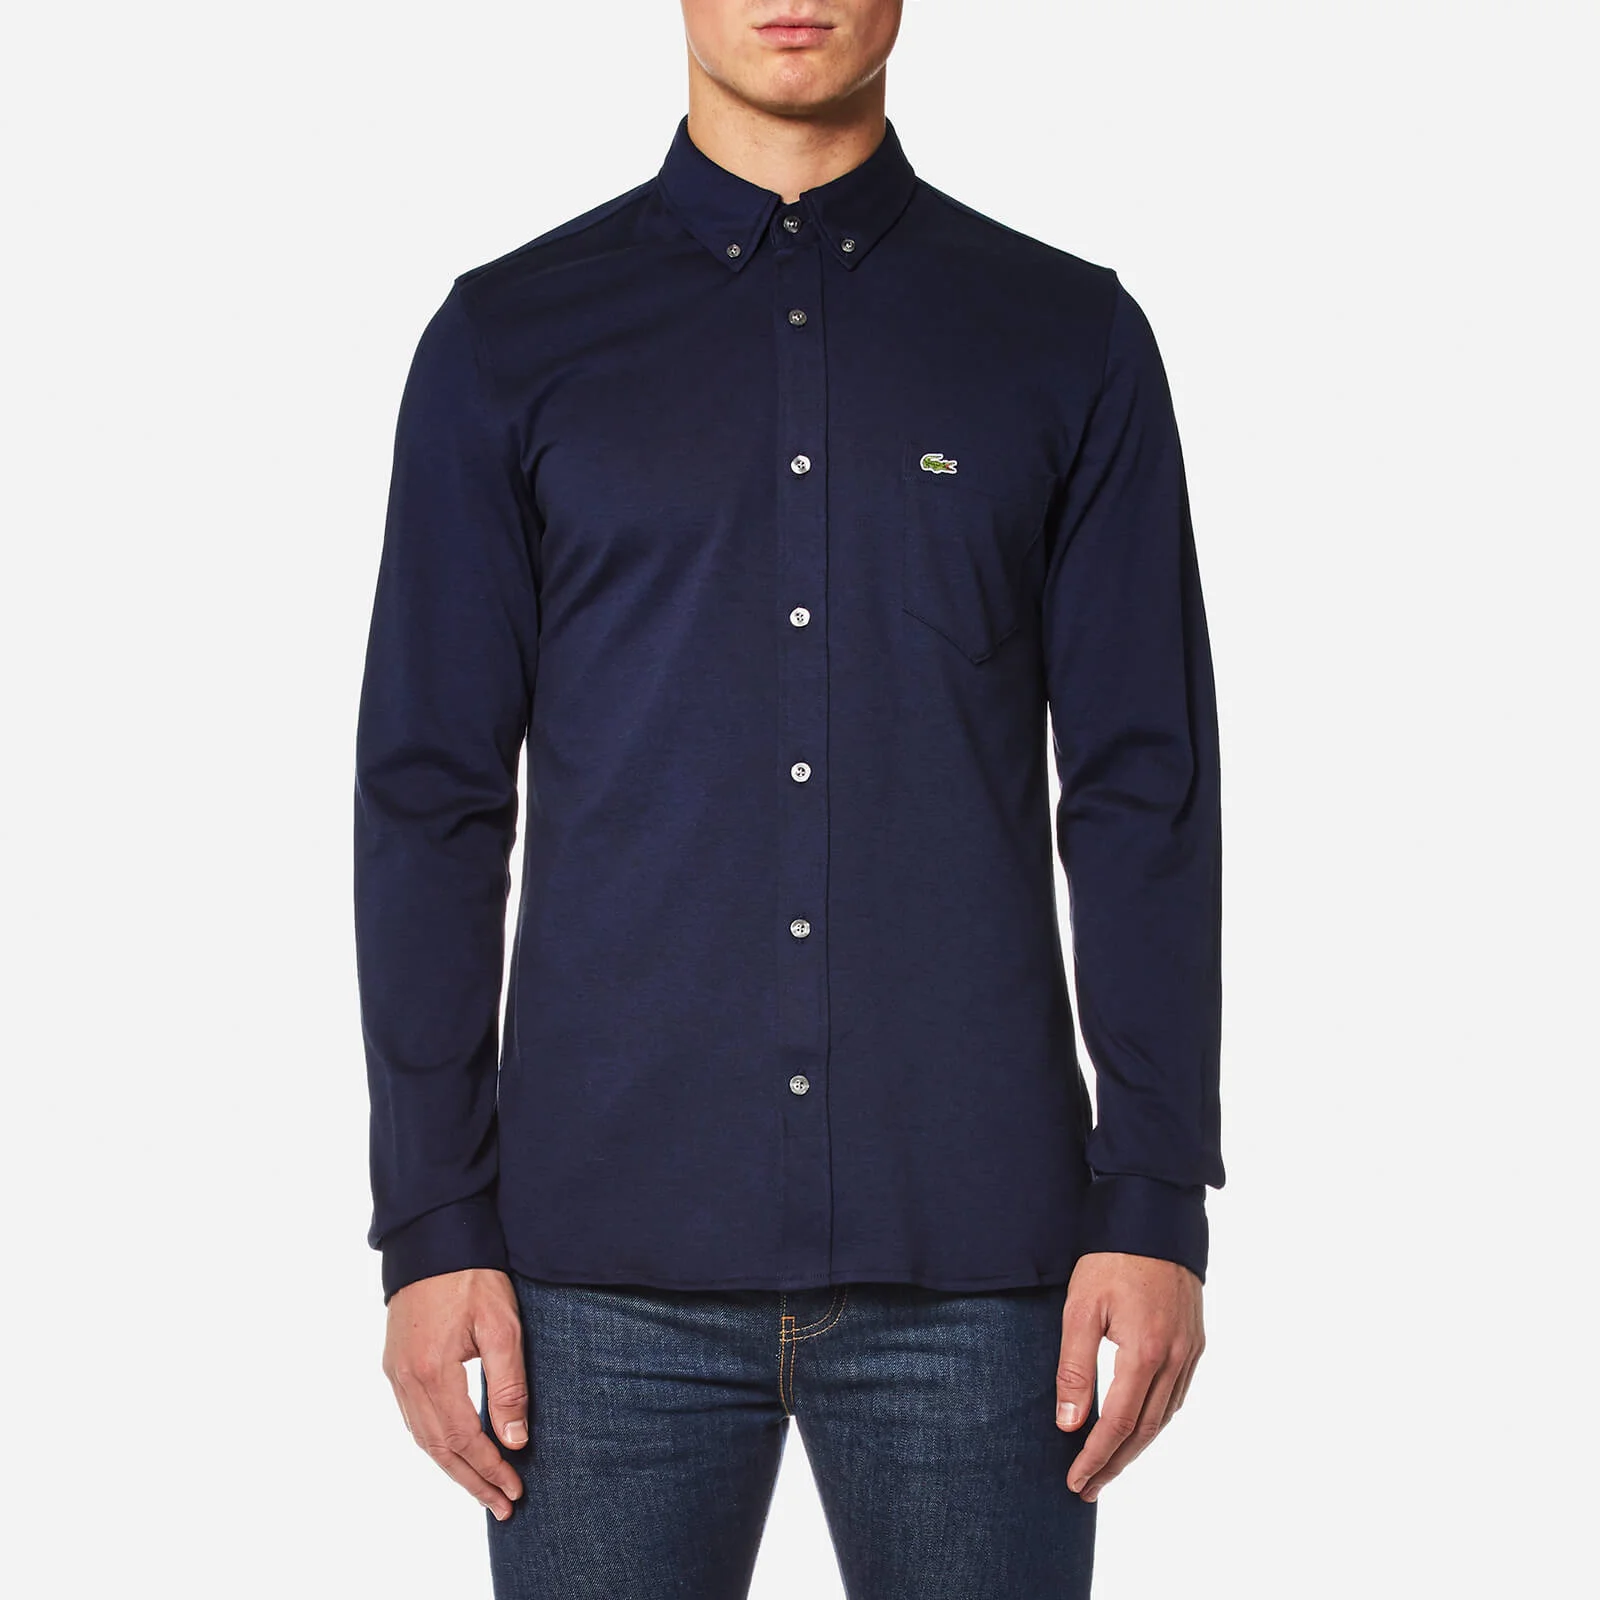 Lacoste Men's Long Sleeve Jersey Shirt - Methylene/Black Image 1